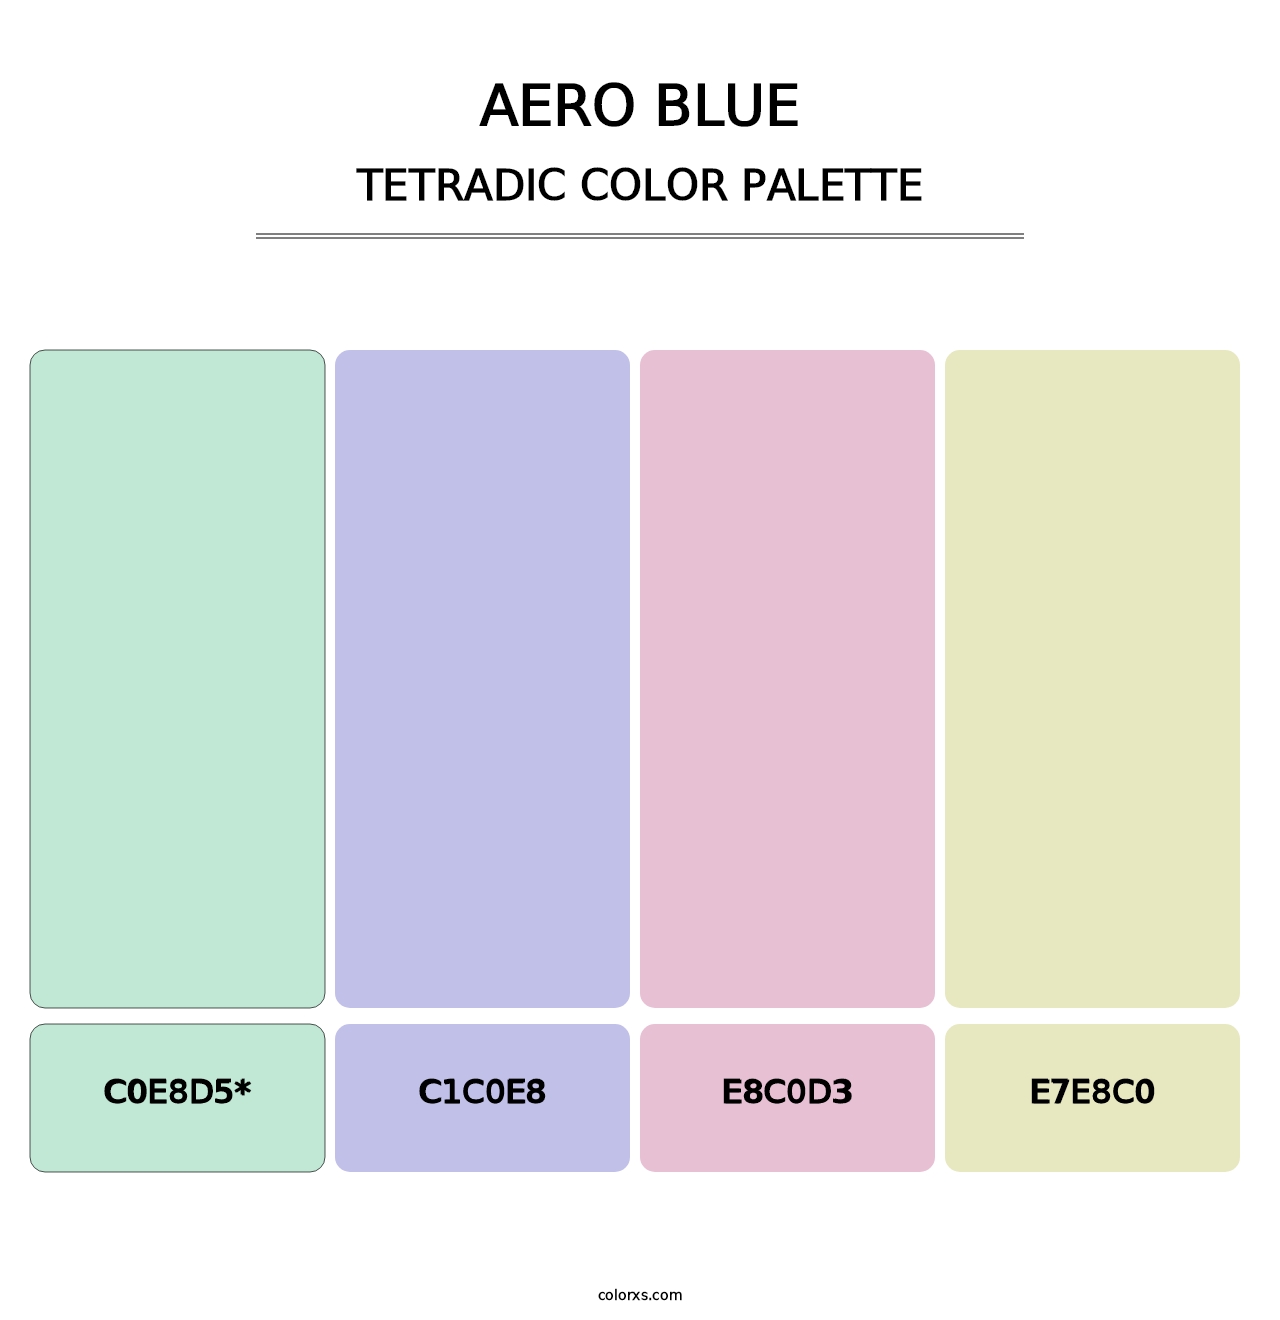 Aero Blue - Tetradic Color Palette